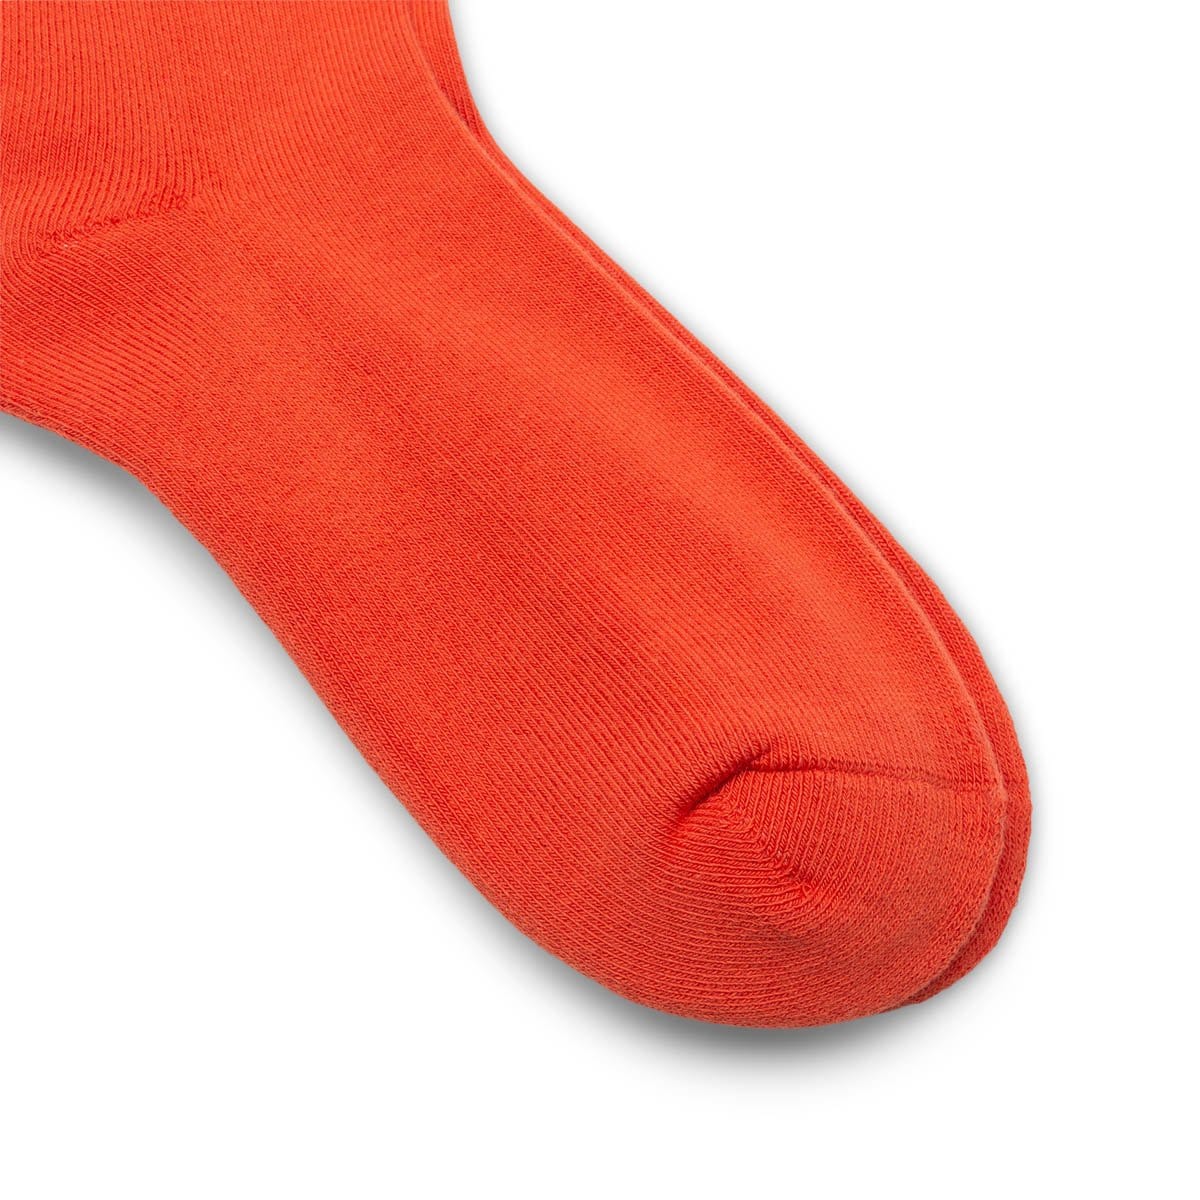 Stüssy Socks ORANGE / 8-13 / 138742 HELVETICA JACQUARD CREW SOCKS